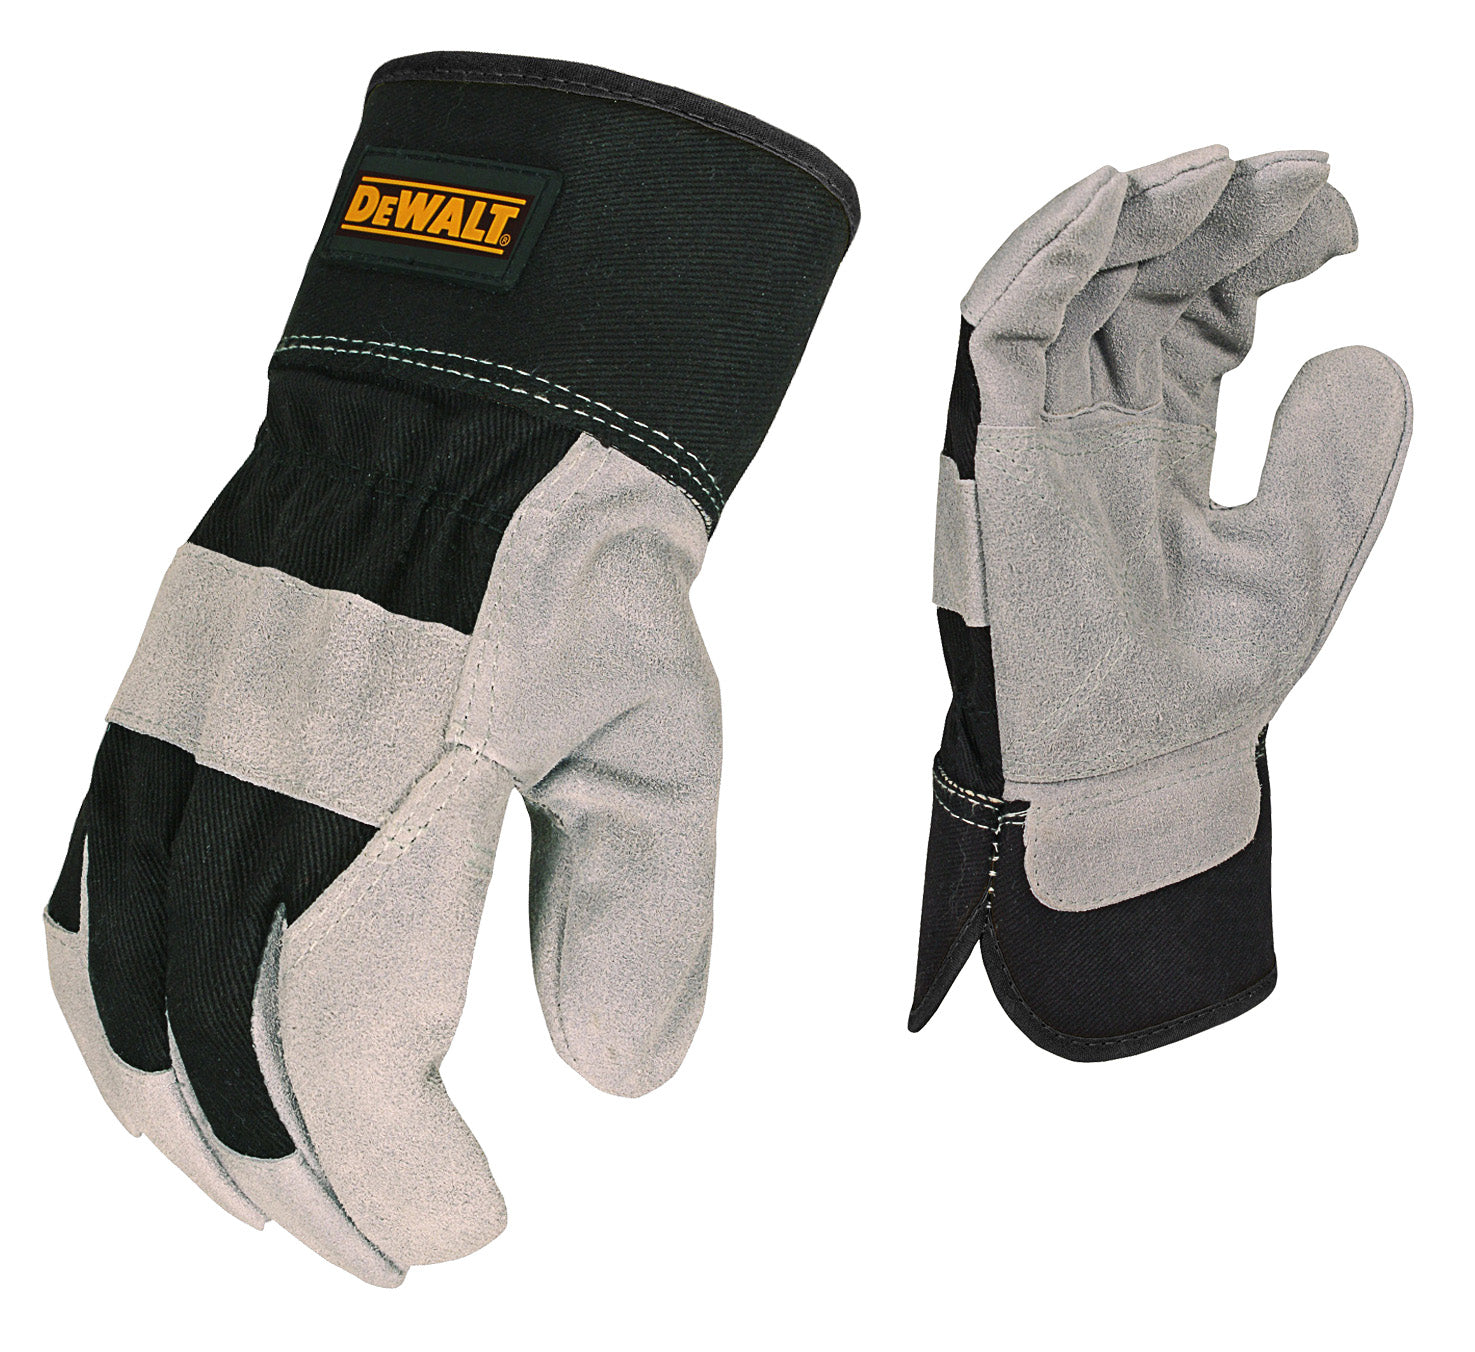 DEWALT DPG41 Select Shoulder Cowhide Leather Palm Glove - Size L - Gray and Black